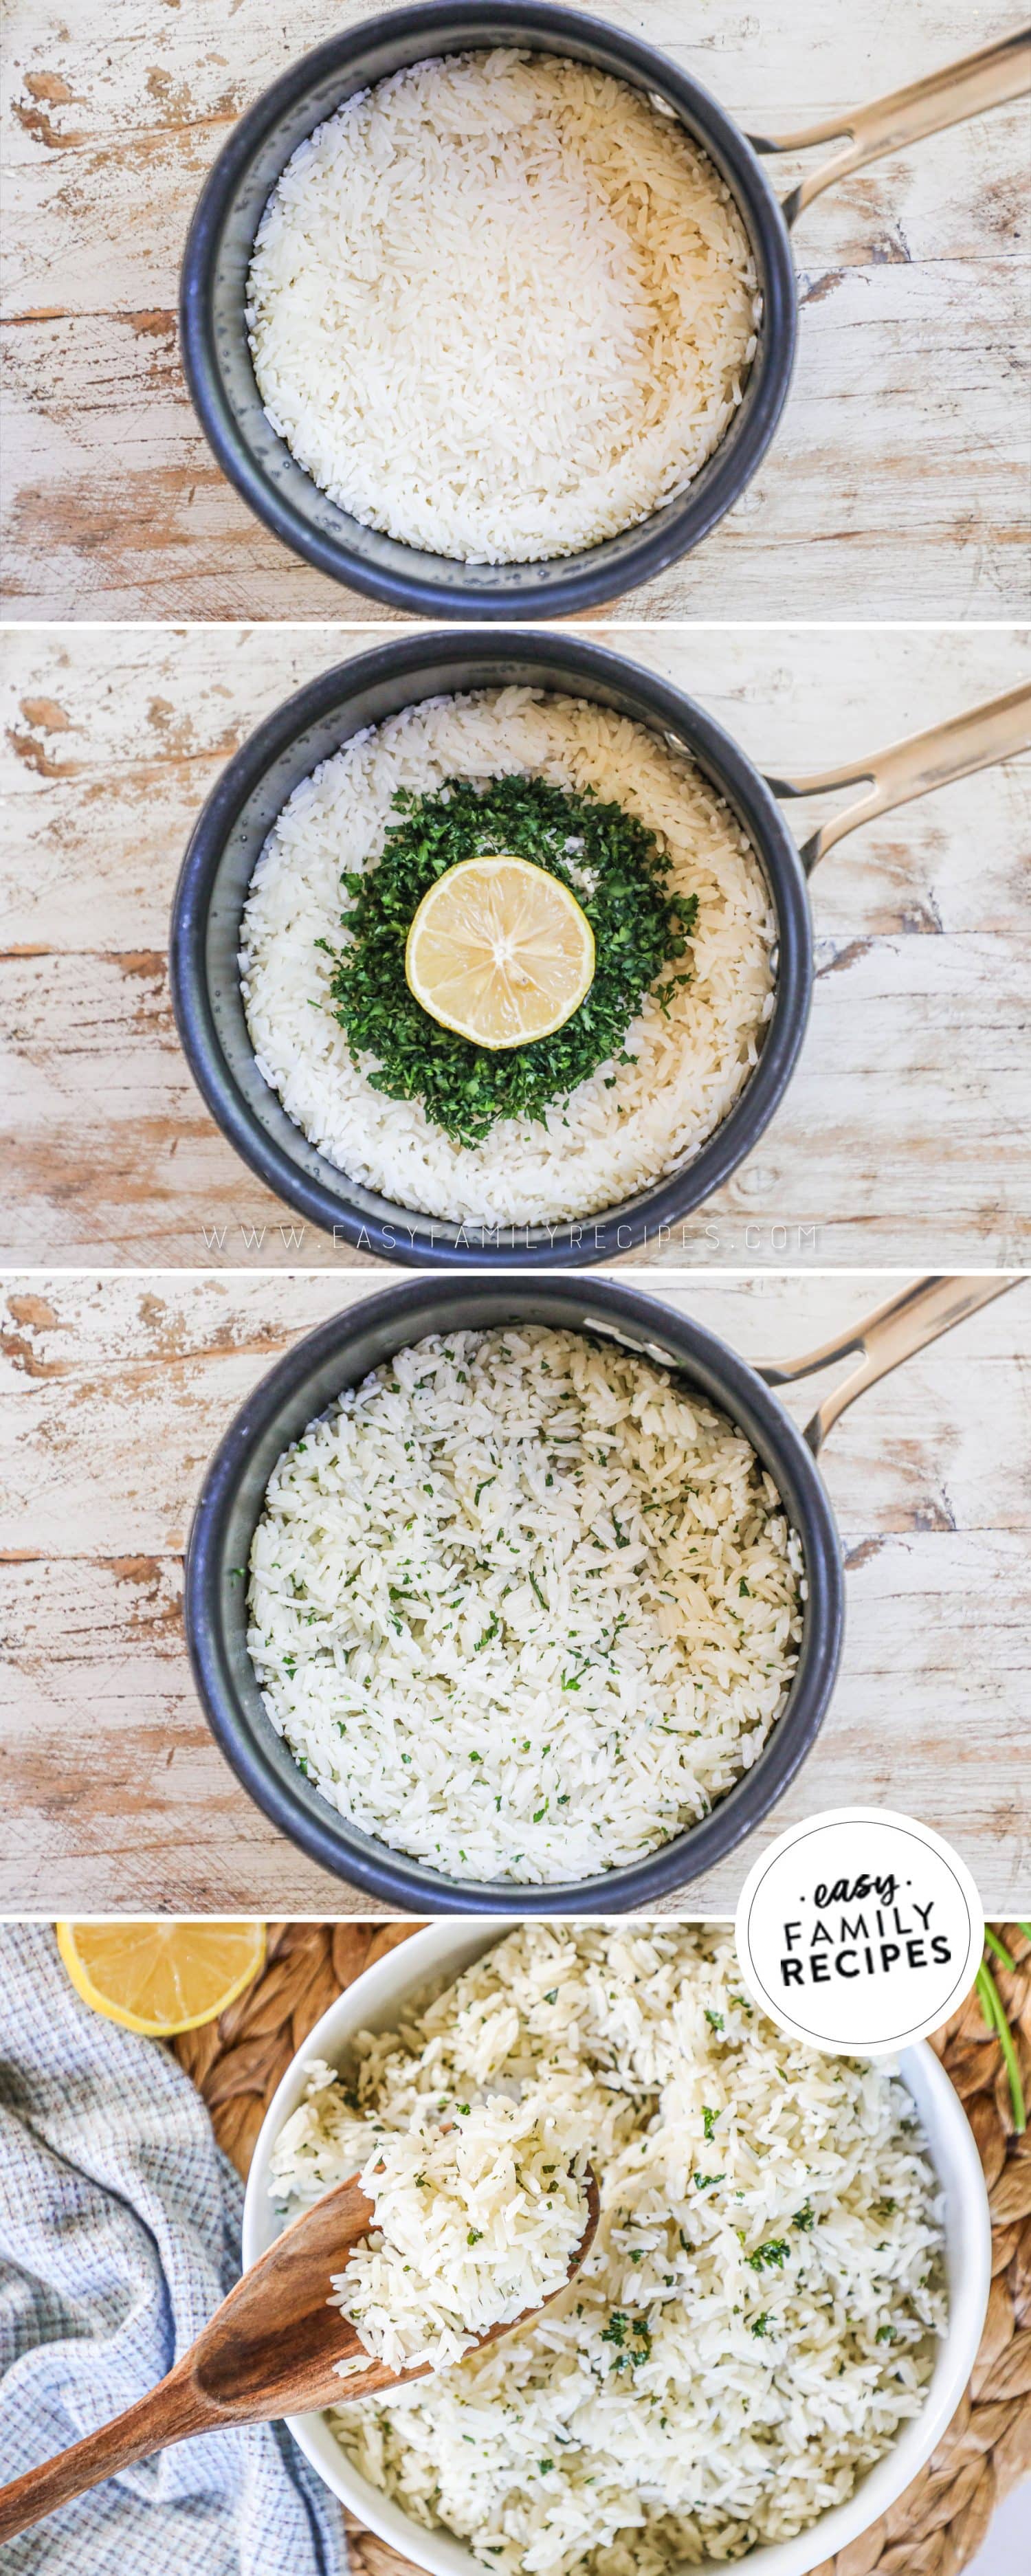 how to make lemon rice 1) cook rice, 2) add fresh herbs and lemon, 3)mix, 4) serve.